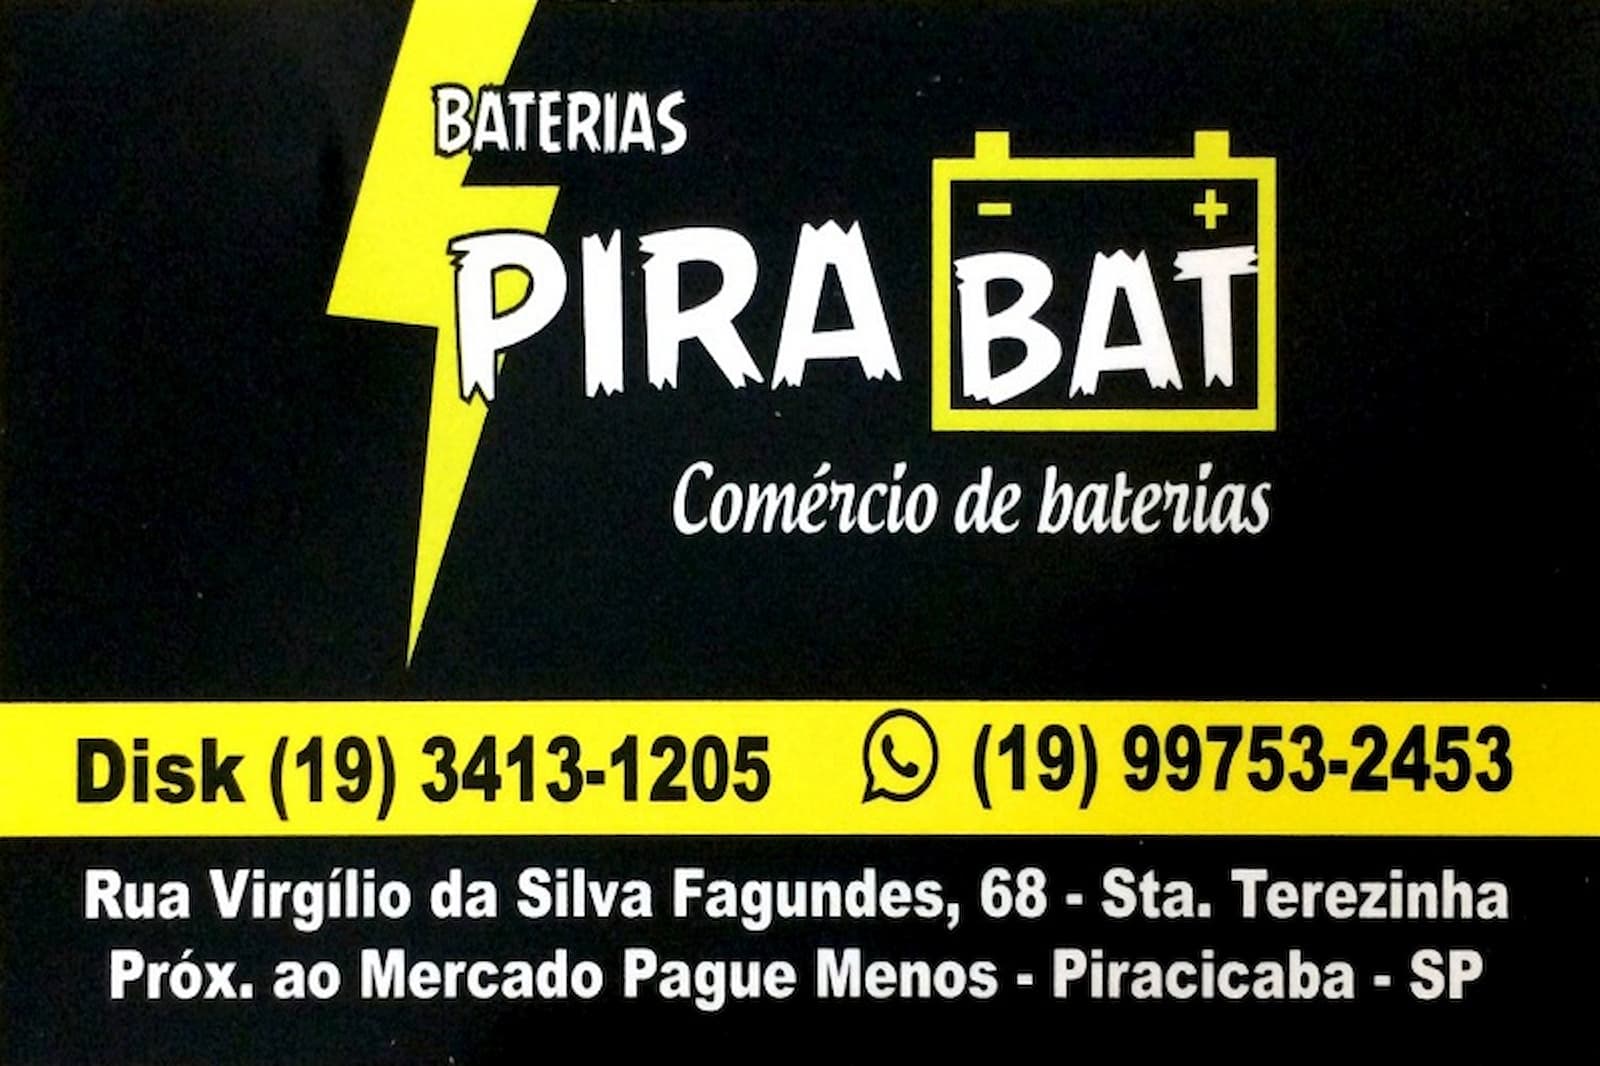 PiraBat Baterias